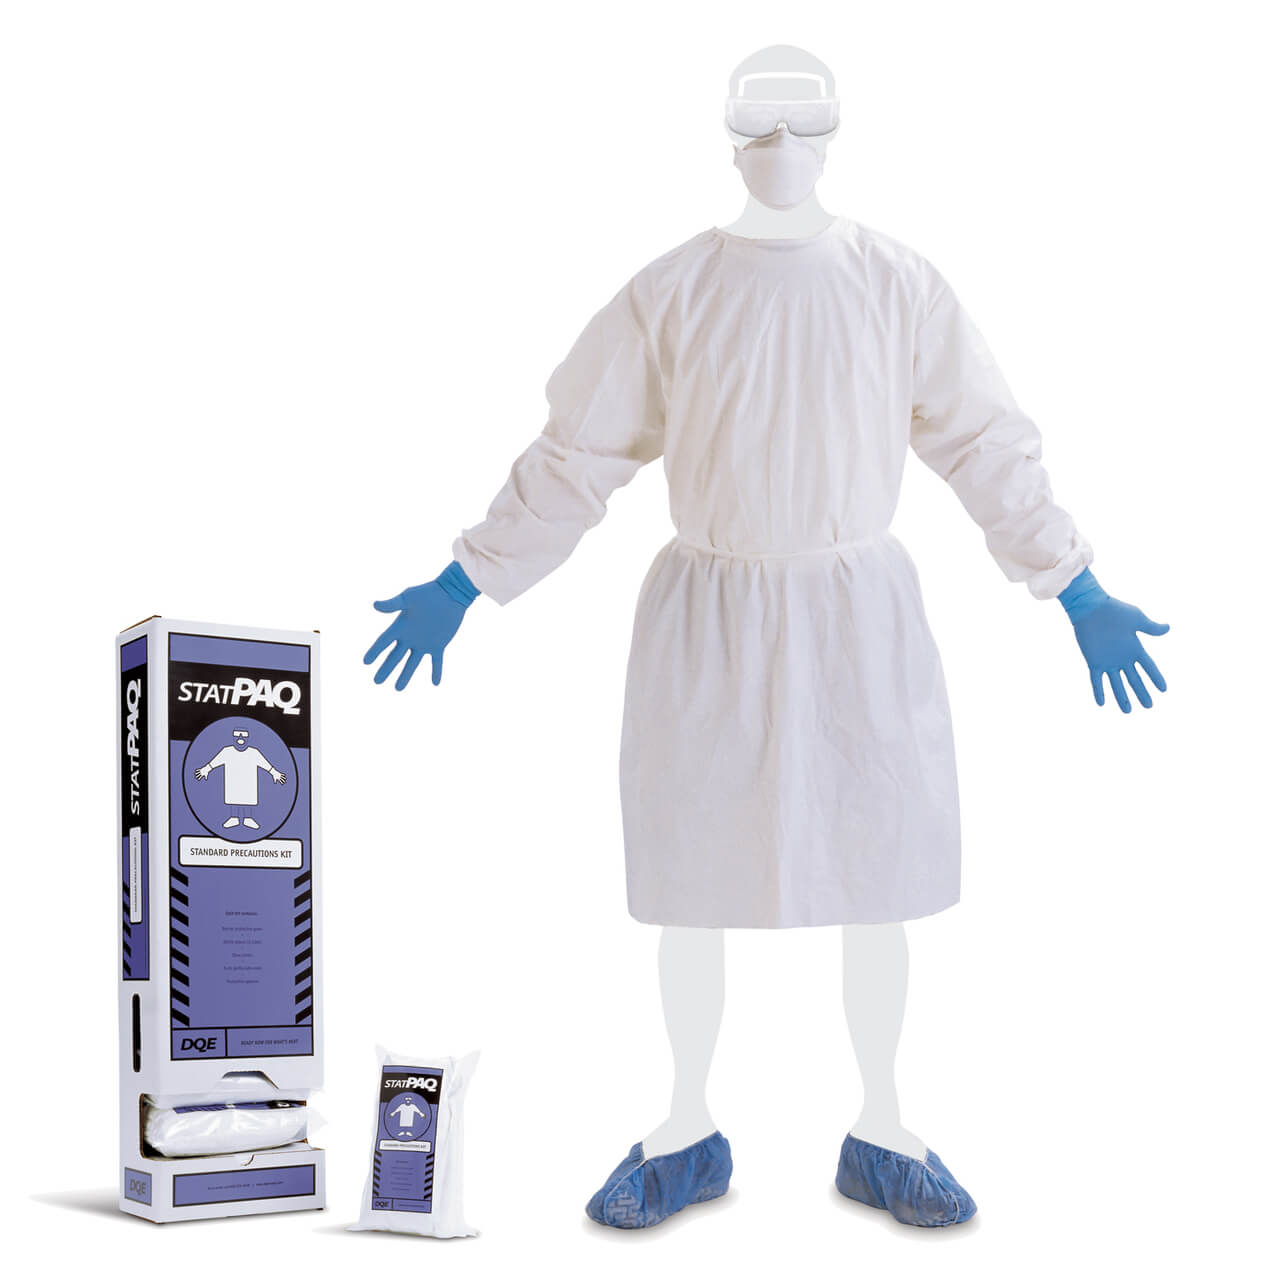 Standard Precaution PPE Kit